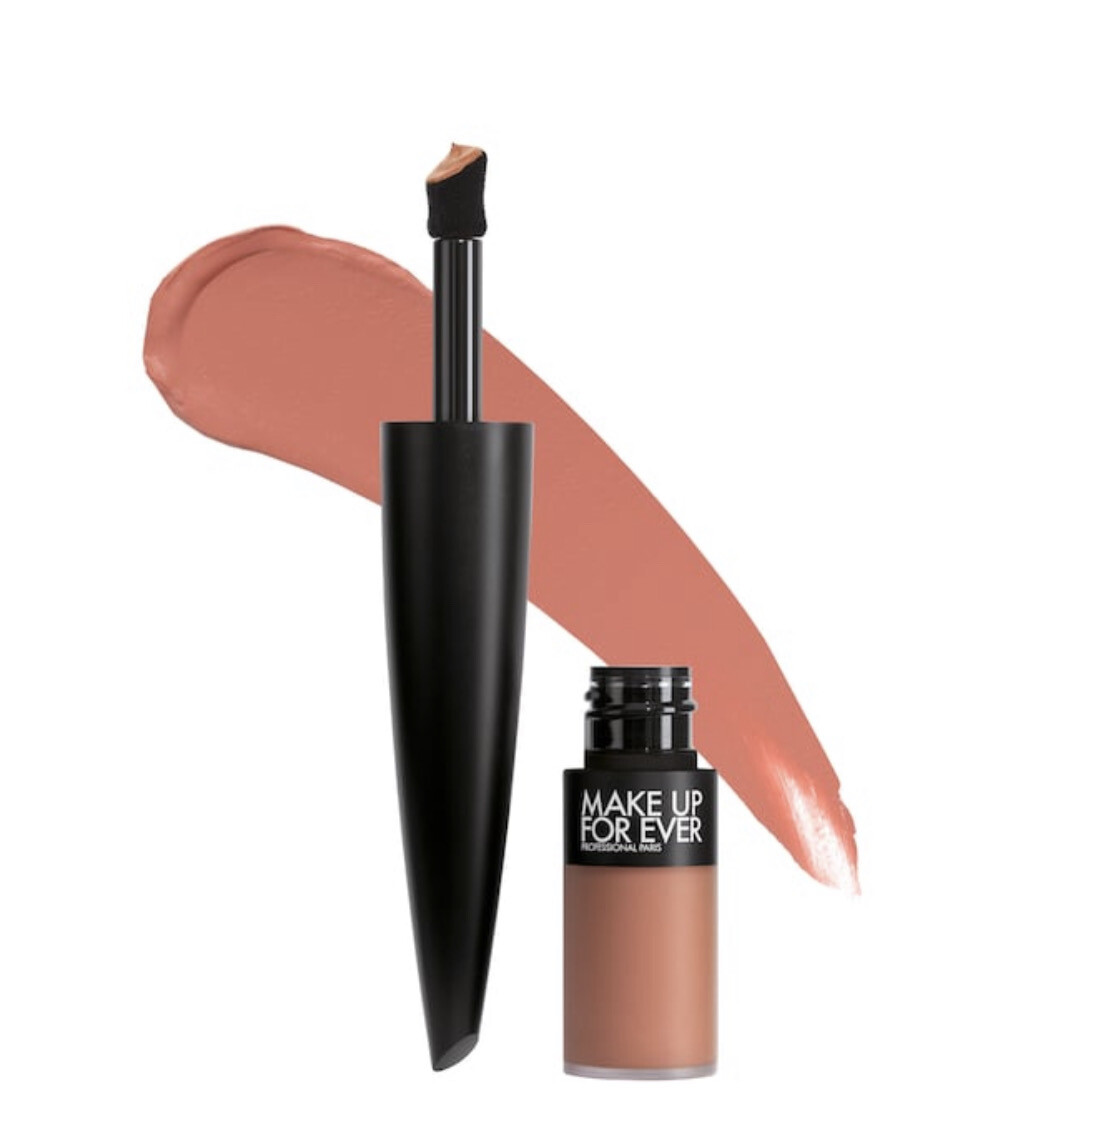 Make Up For Ever - Rouge Artist For Ever Matte 24HR Longwear Liquid Lipstick | 190 Always Au Naturel - peachy nude